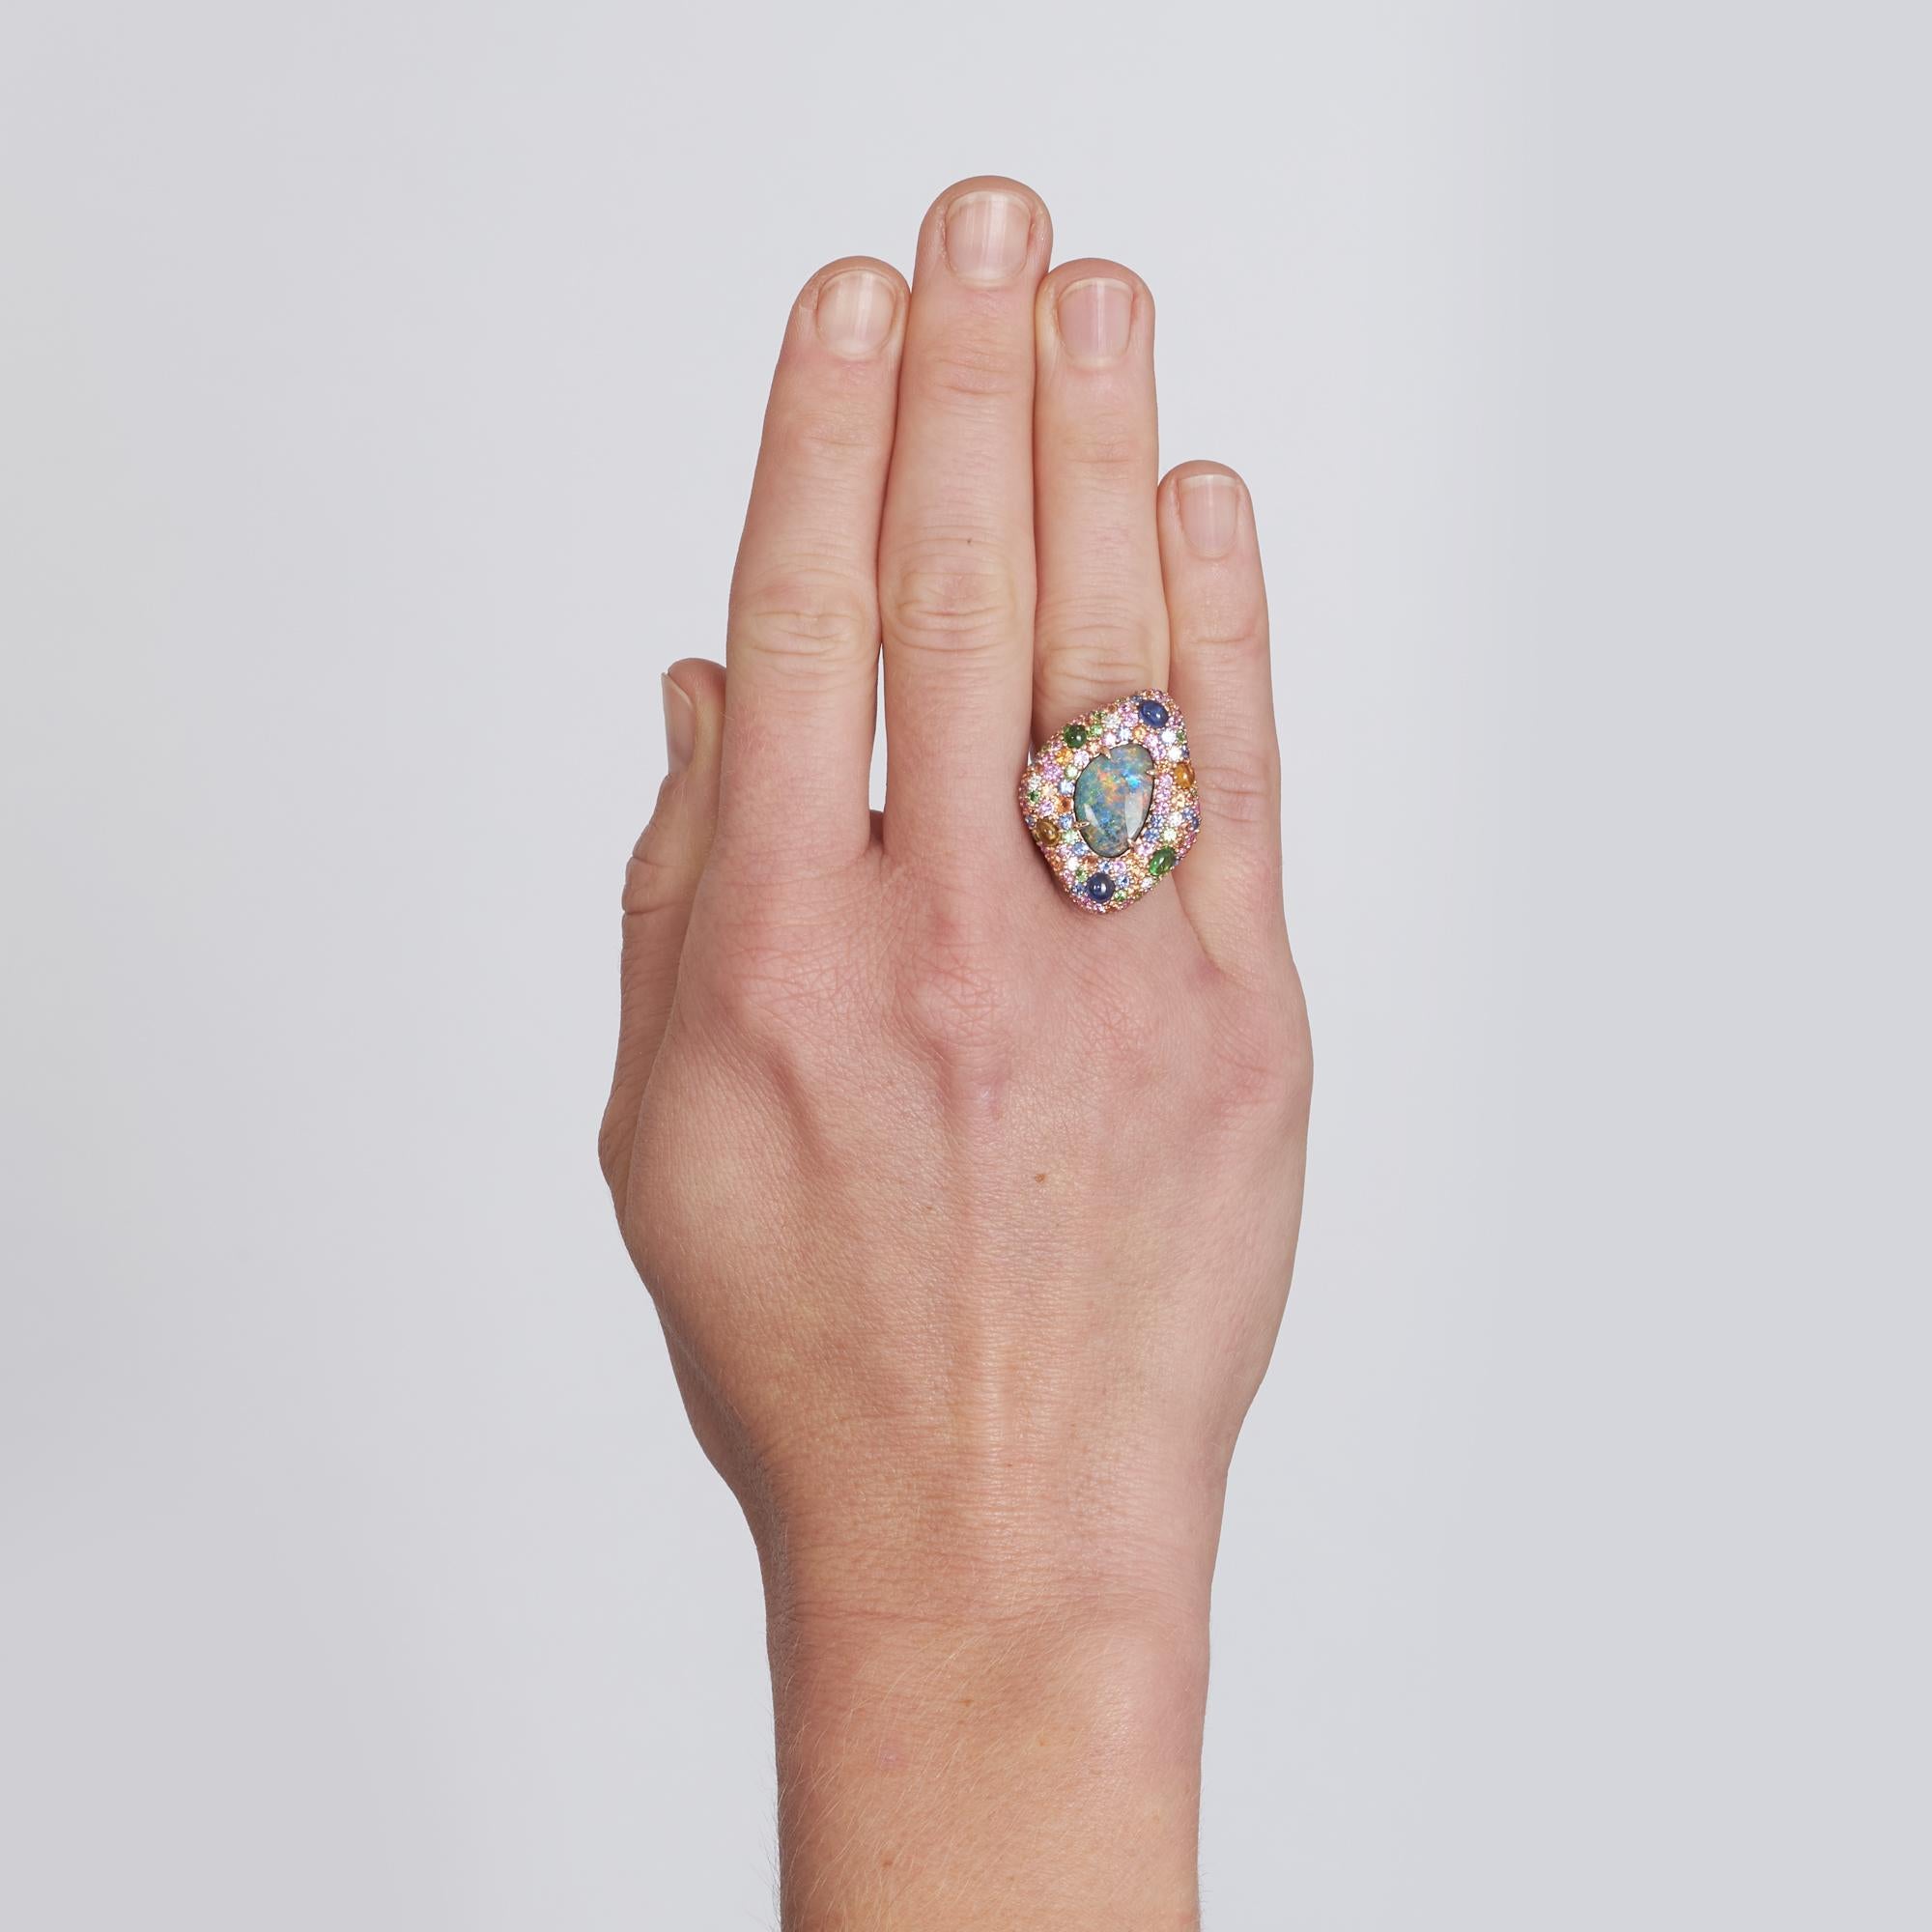 Margot McKinney 18 Karat Rose Gold Ring with Opal, Pink Sapphire, and Tsavorite 1